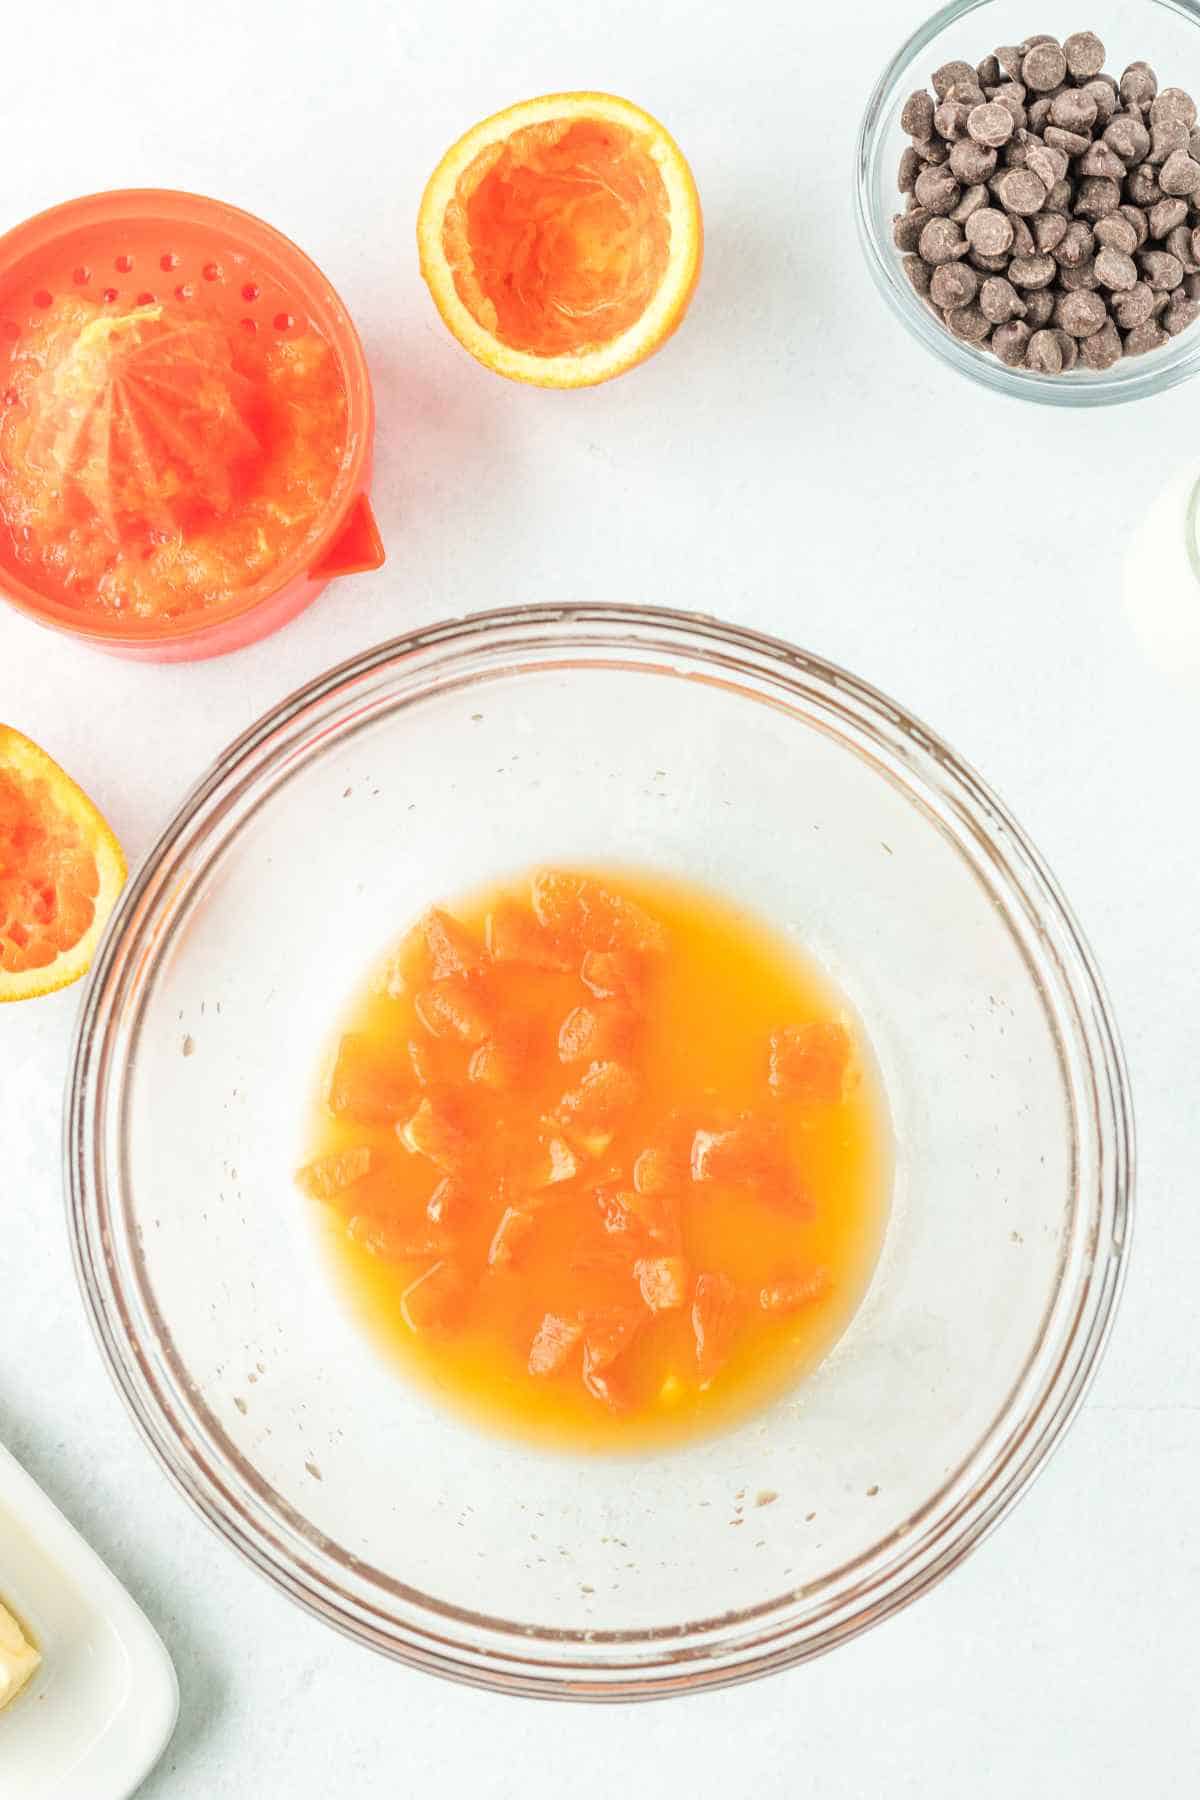 bowl of orange juice and diced oranges.